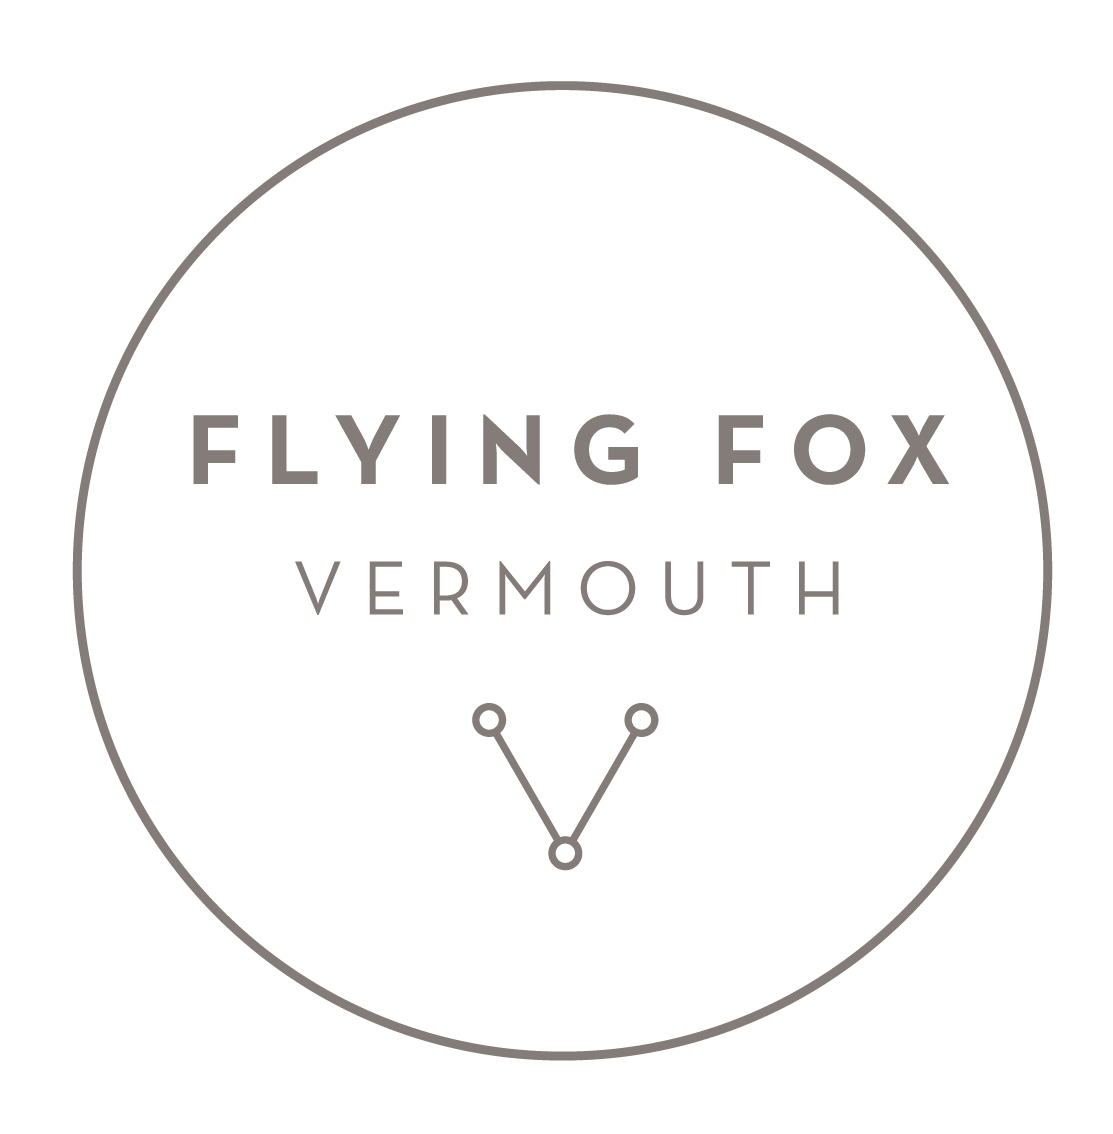 FLYING FOX VERMOUTH